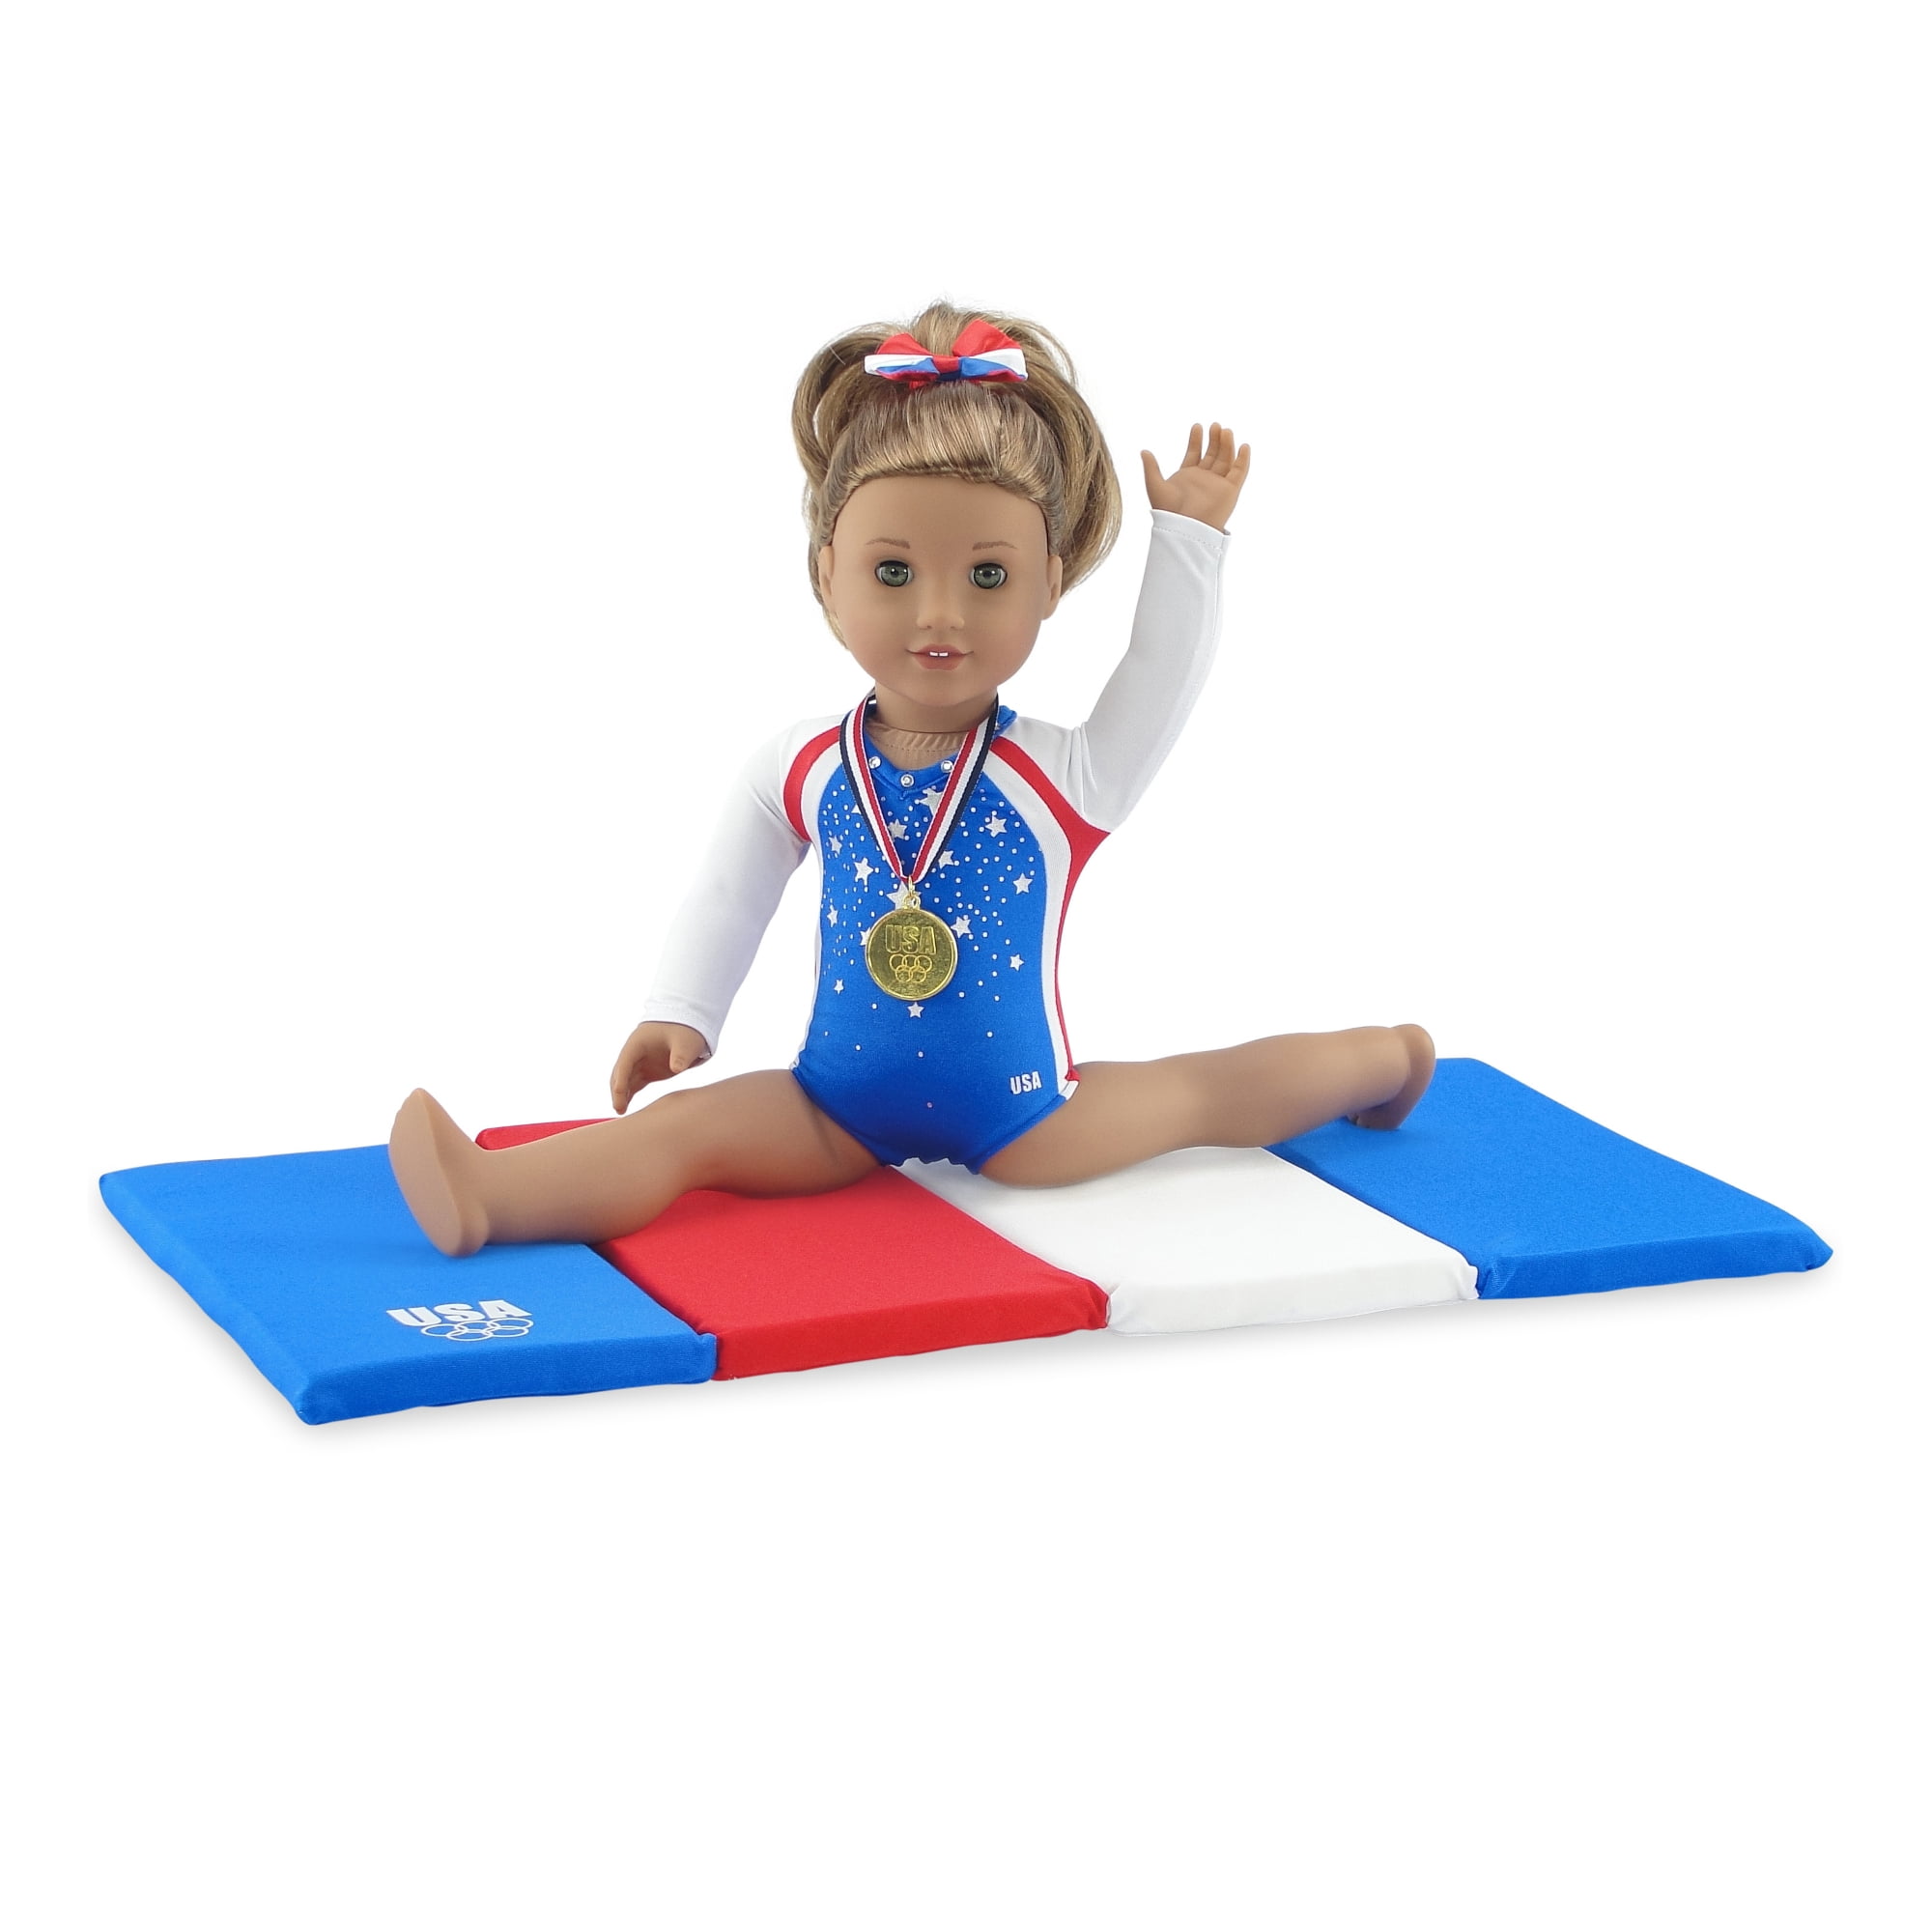 doll gymnastics outfit